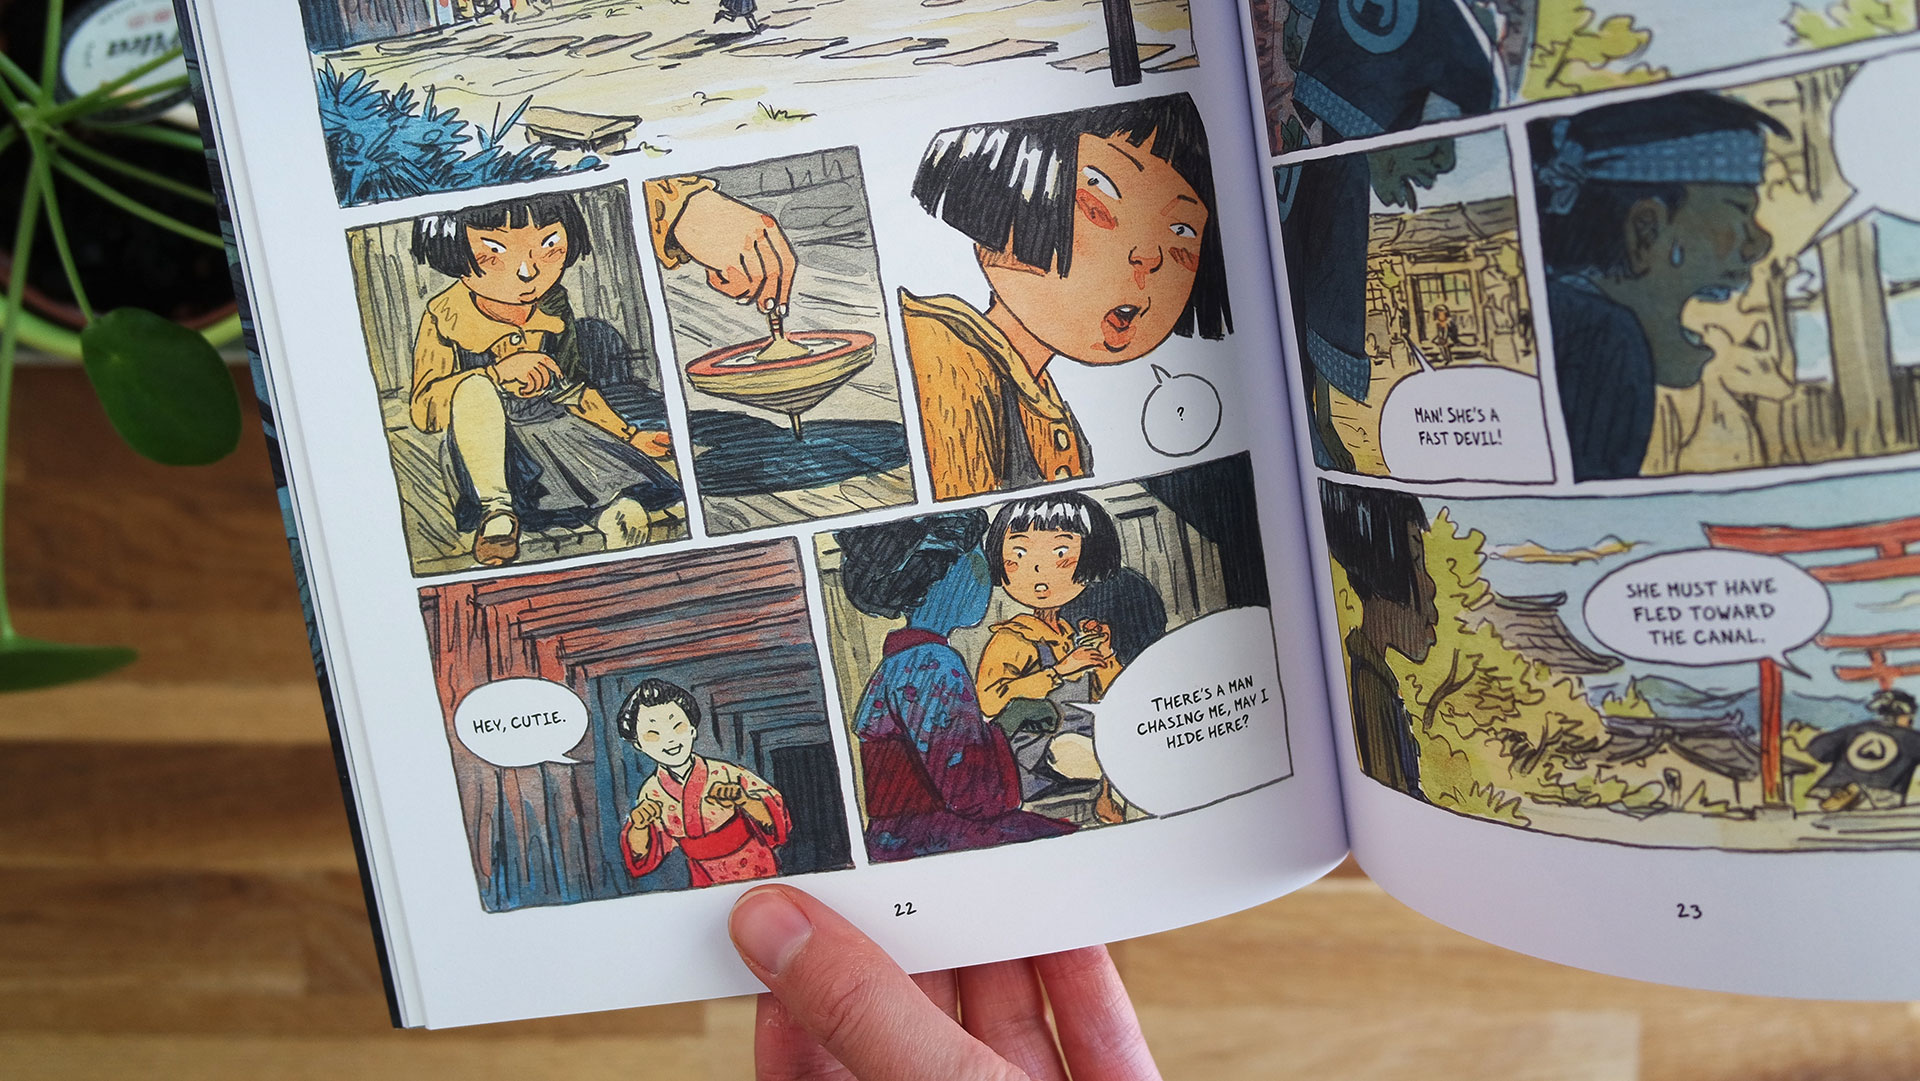 comic book about yokai by atelier sento set in japan